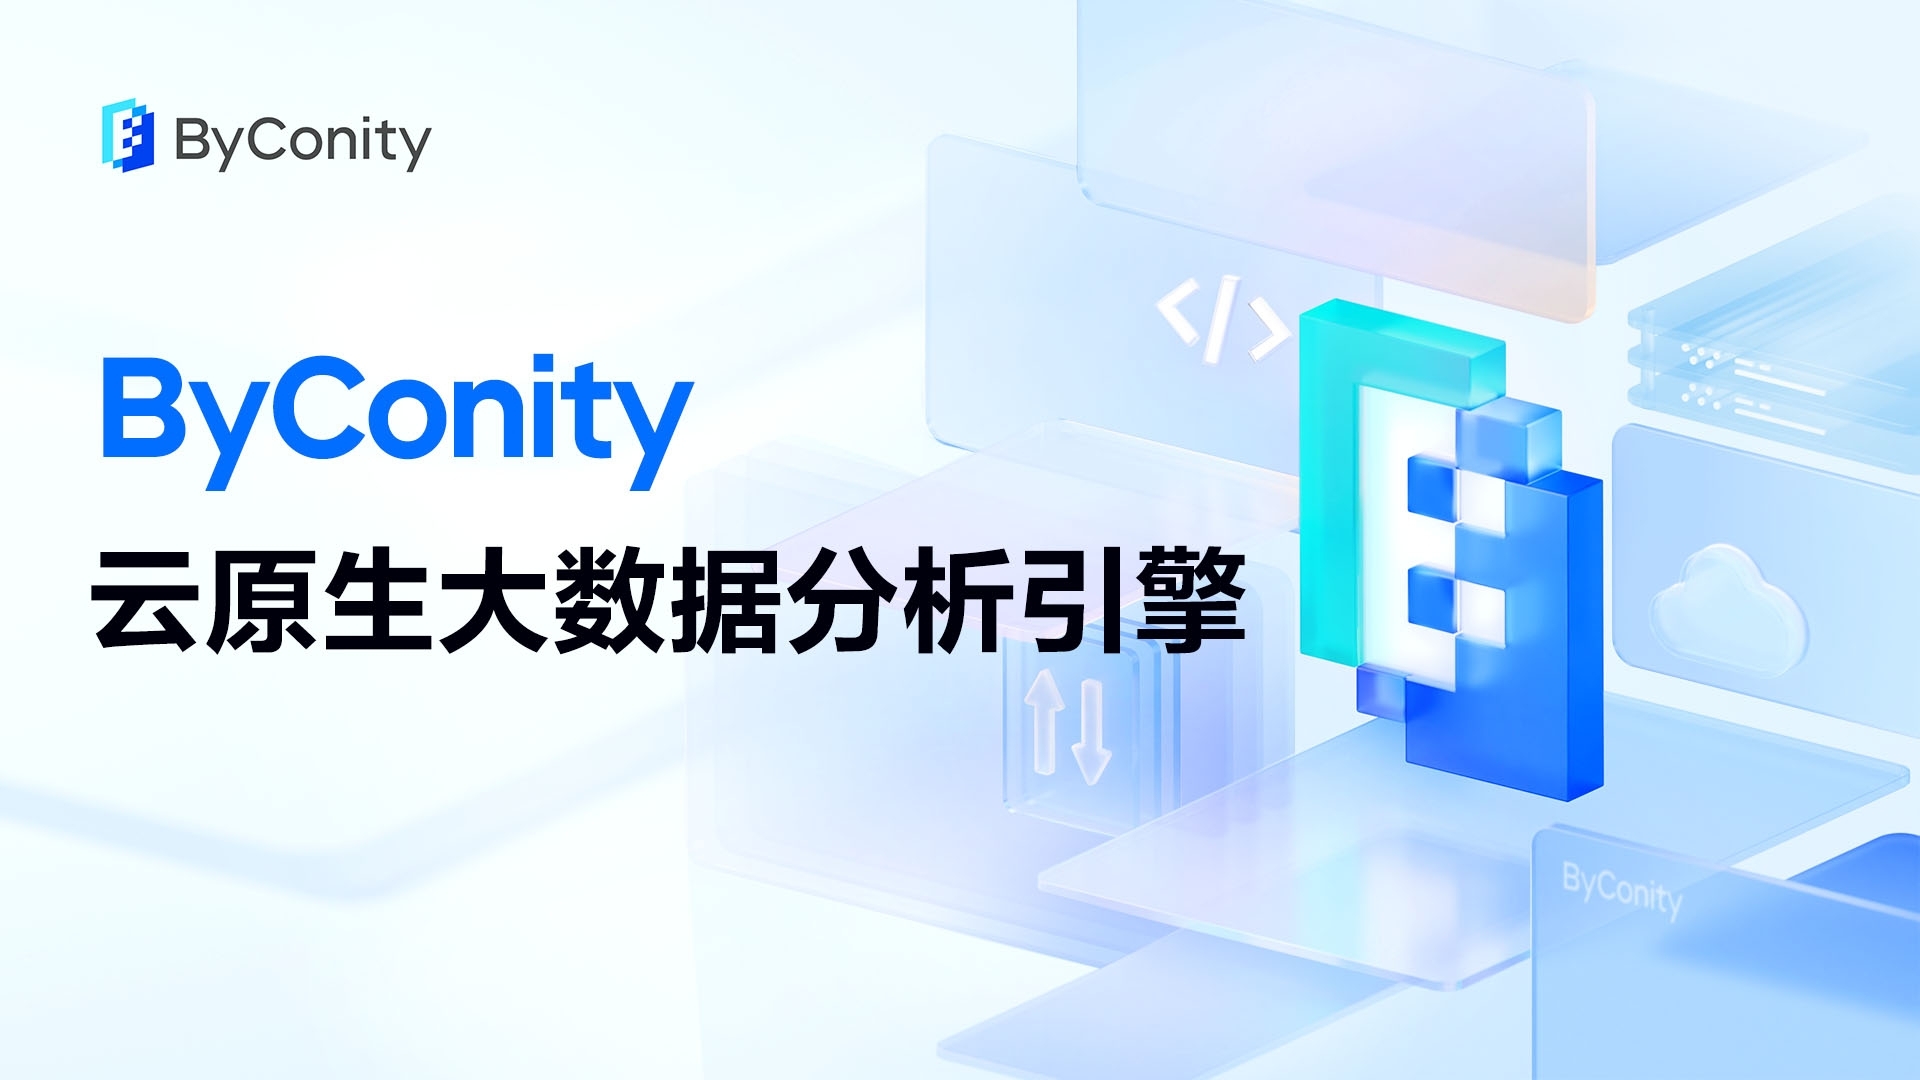 ByConity 首次 TPC-DS 测试结果发布 & 新活动邀请！